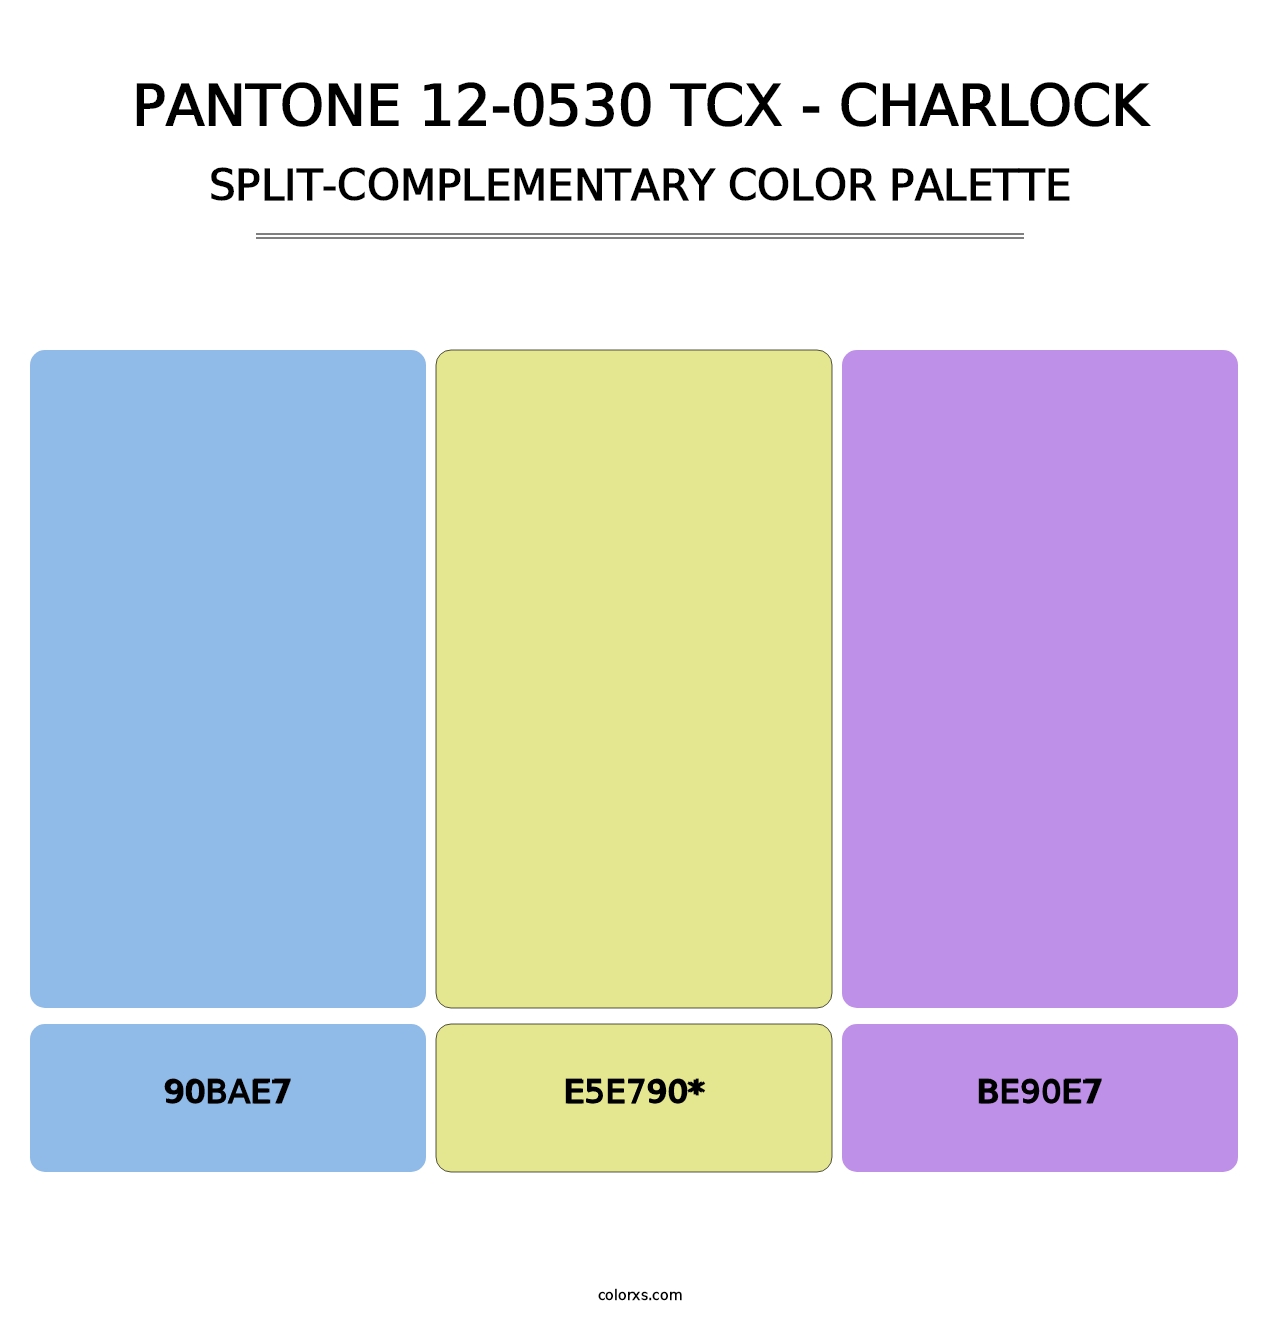 PANTONE 12-0530 TCX - Charlock - Split-Complementary Color Palette